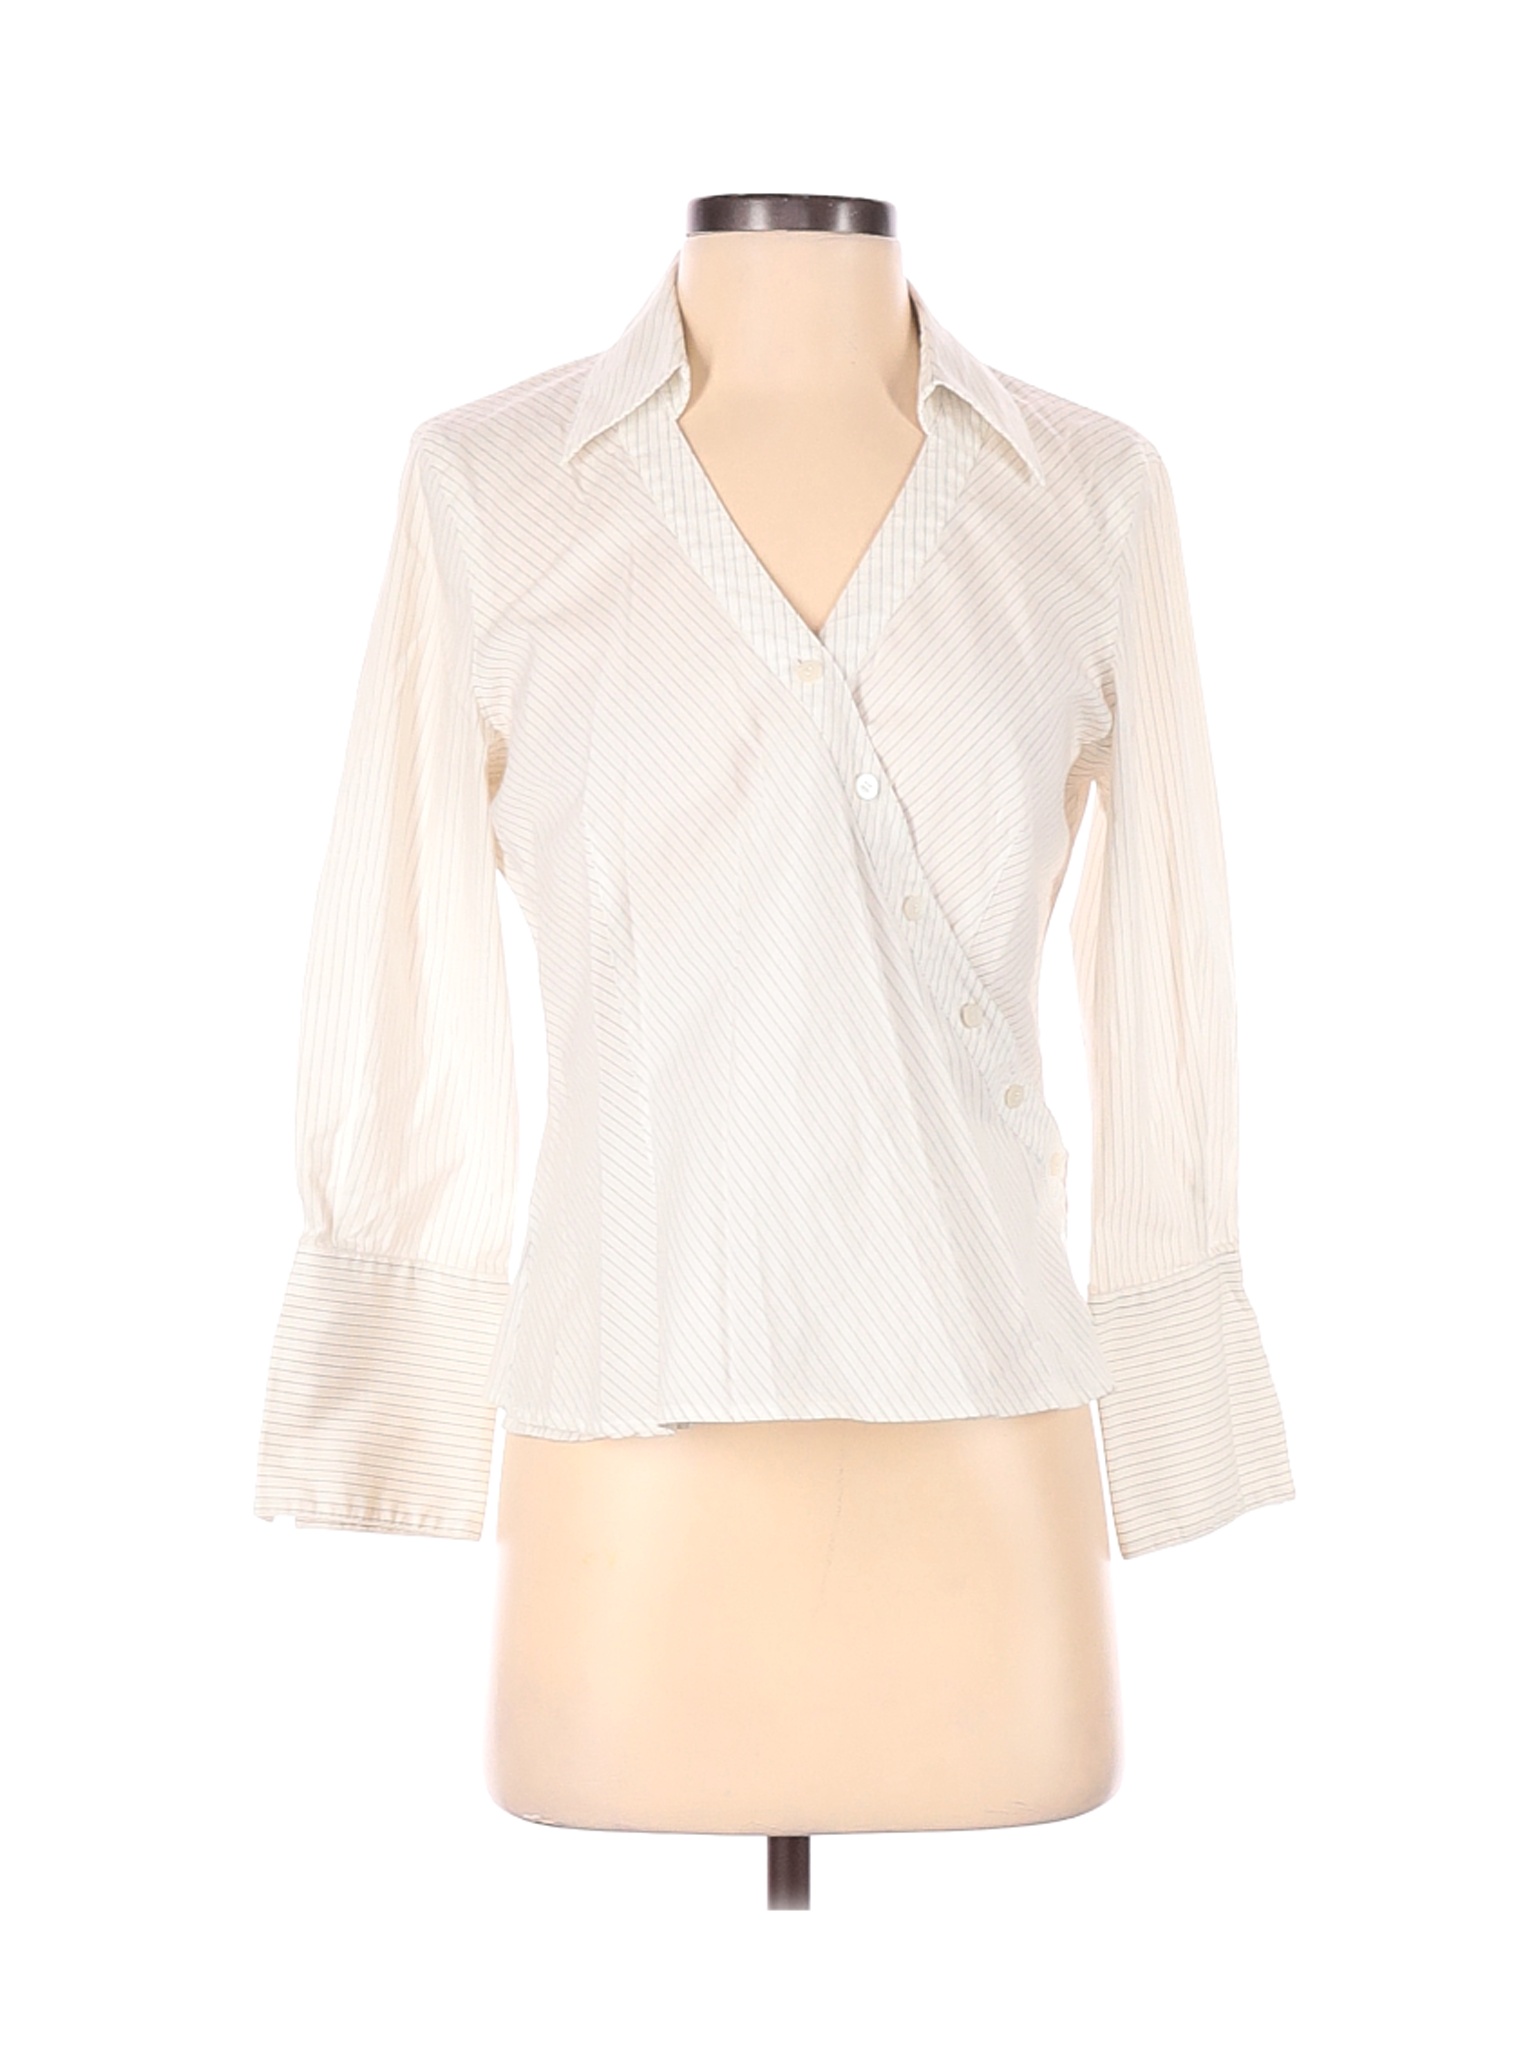 Nine West Women Ivory 3/4 Sleeve Button-Down Shirt 8 | eBay